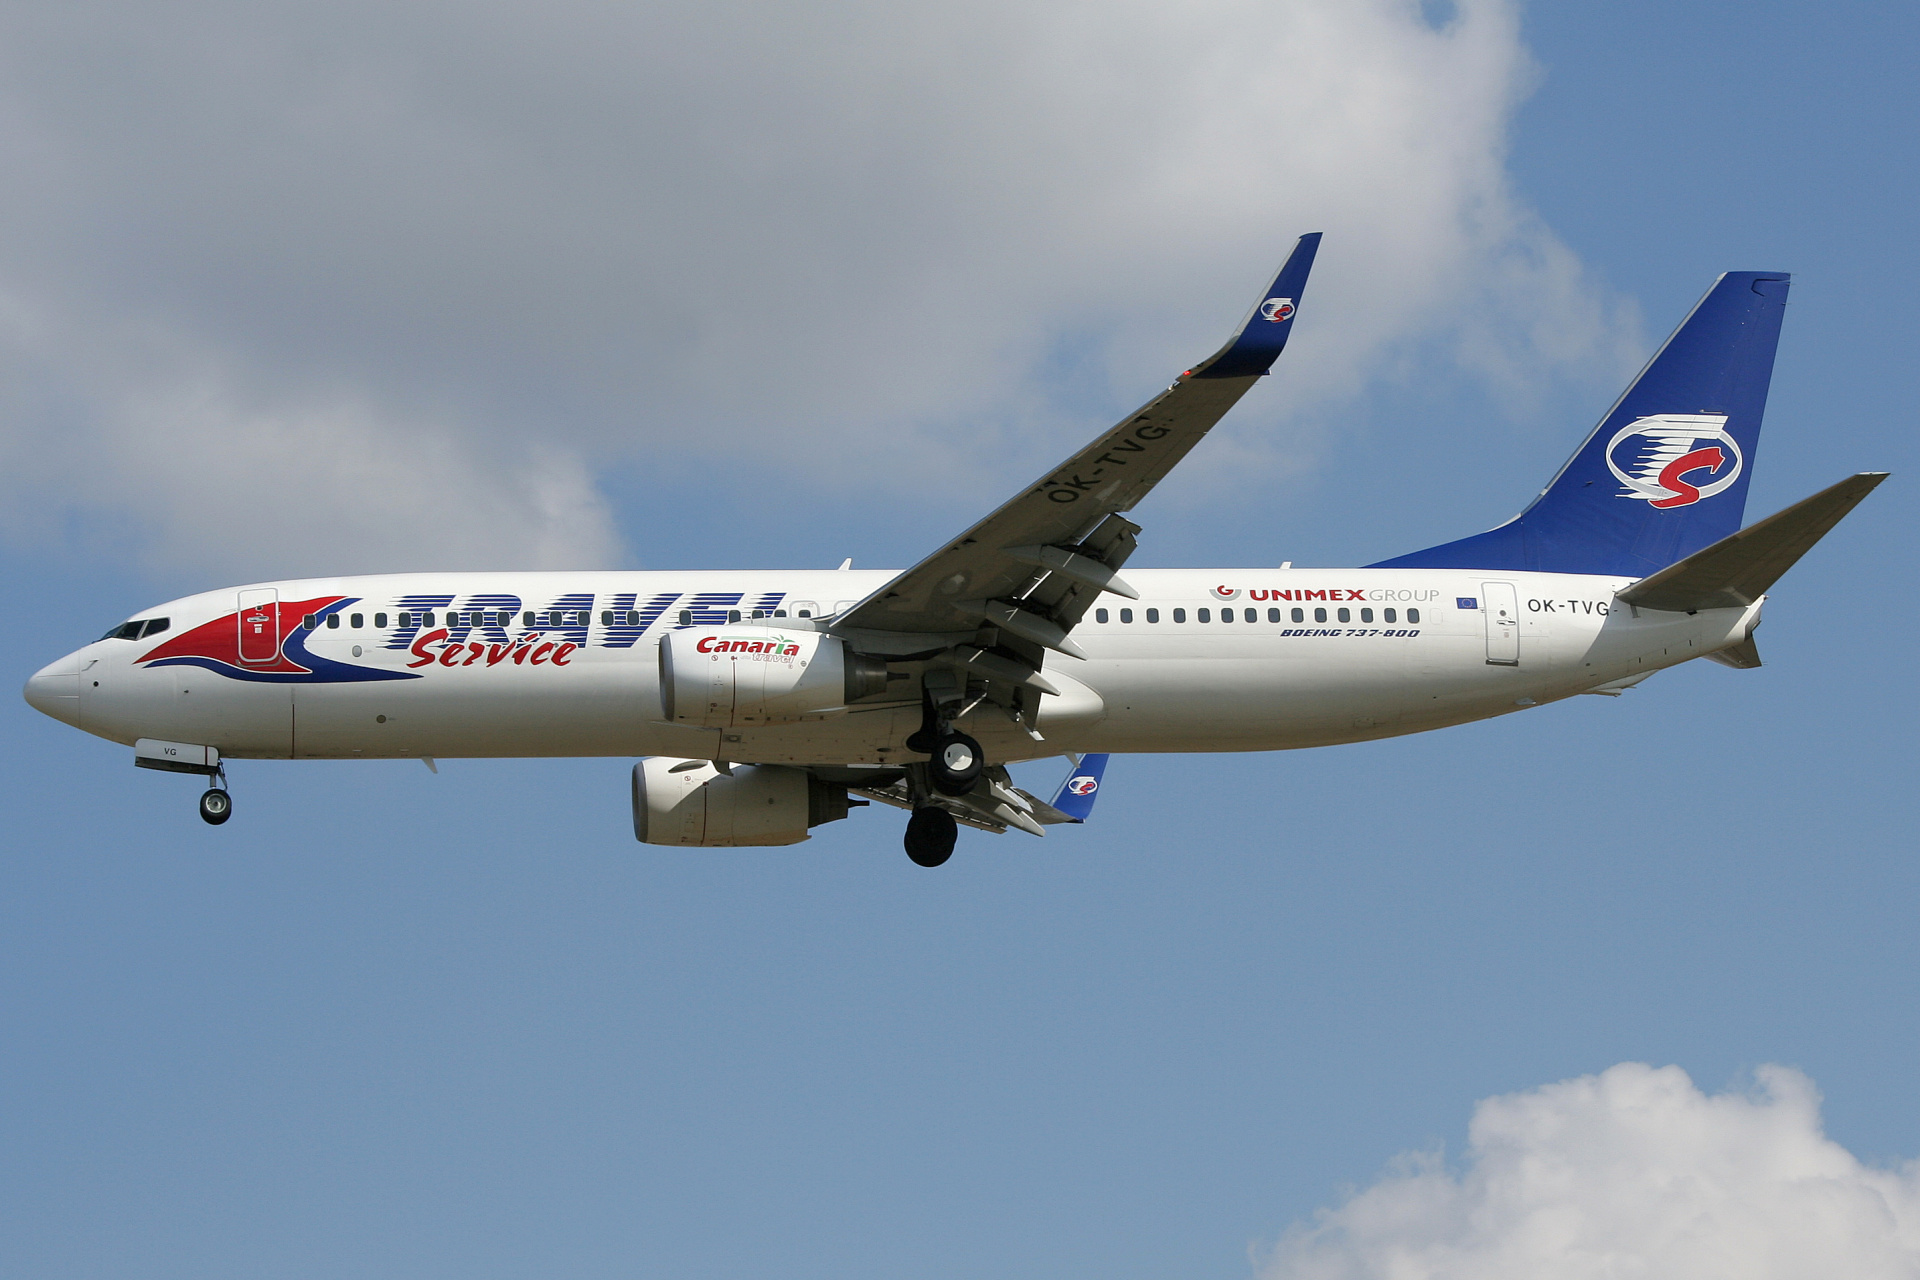 OK-TVG (Aircraft » EPWA Spotting » Boeing 737-800 » Travel Service Airlines)